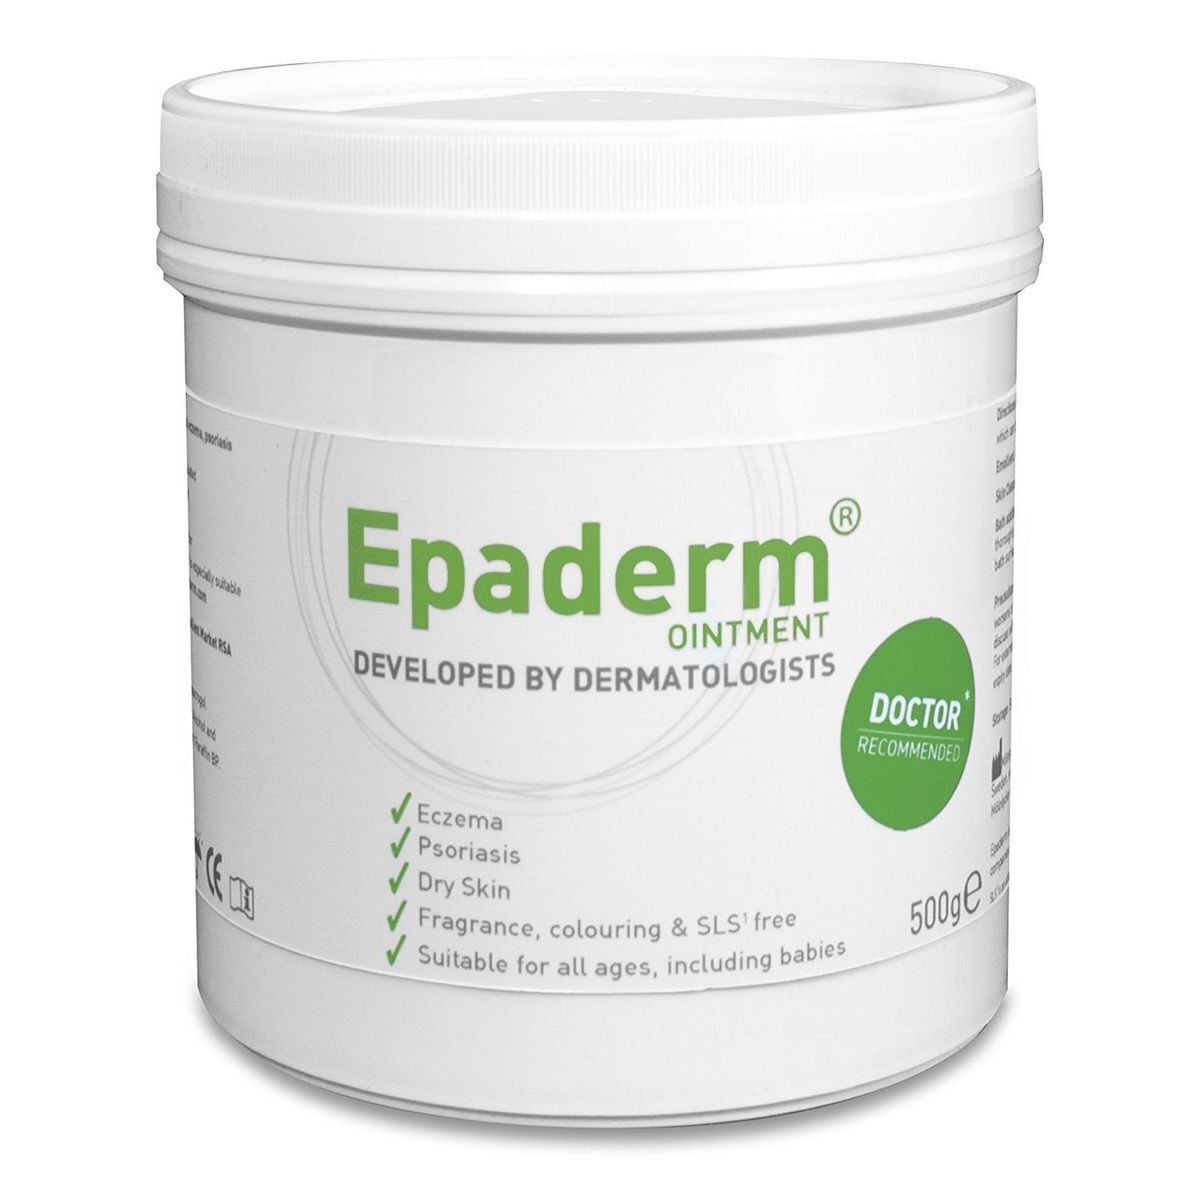 Formulario 500g 3-1 Specifically Epaderm Ointment Tub Moisturizer Dry Skin Condition